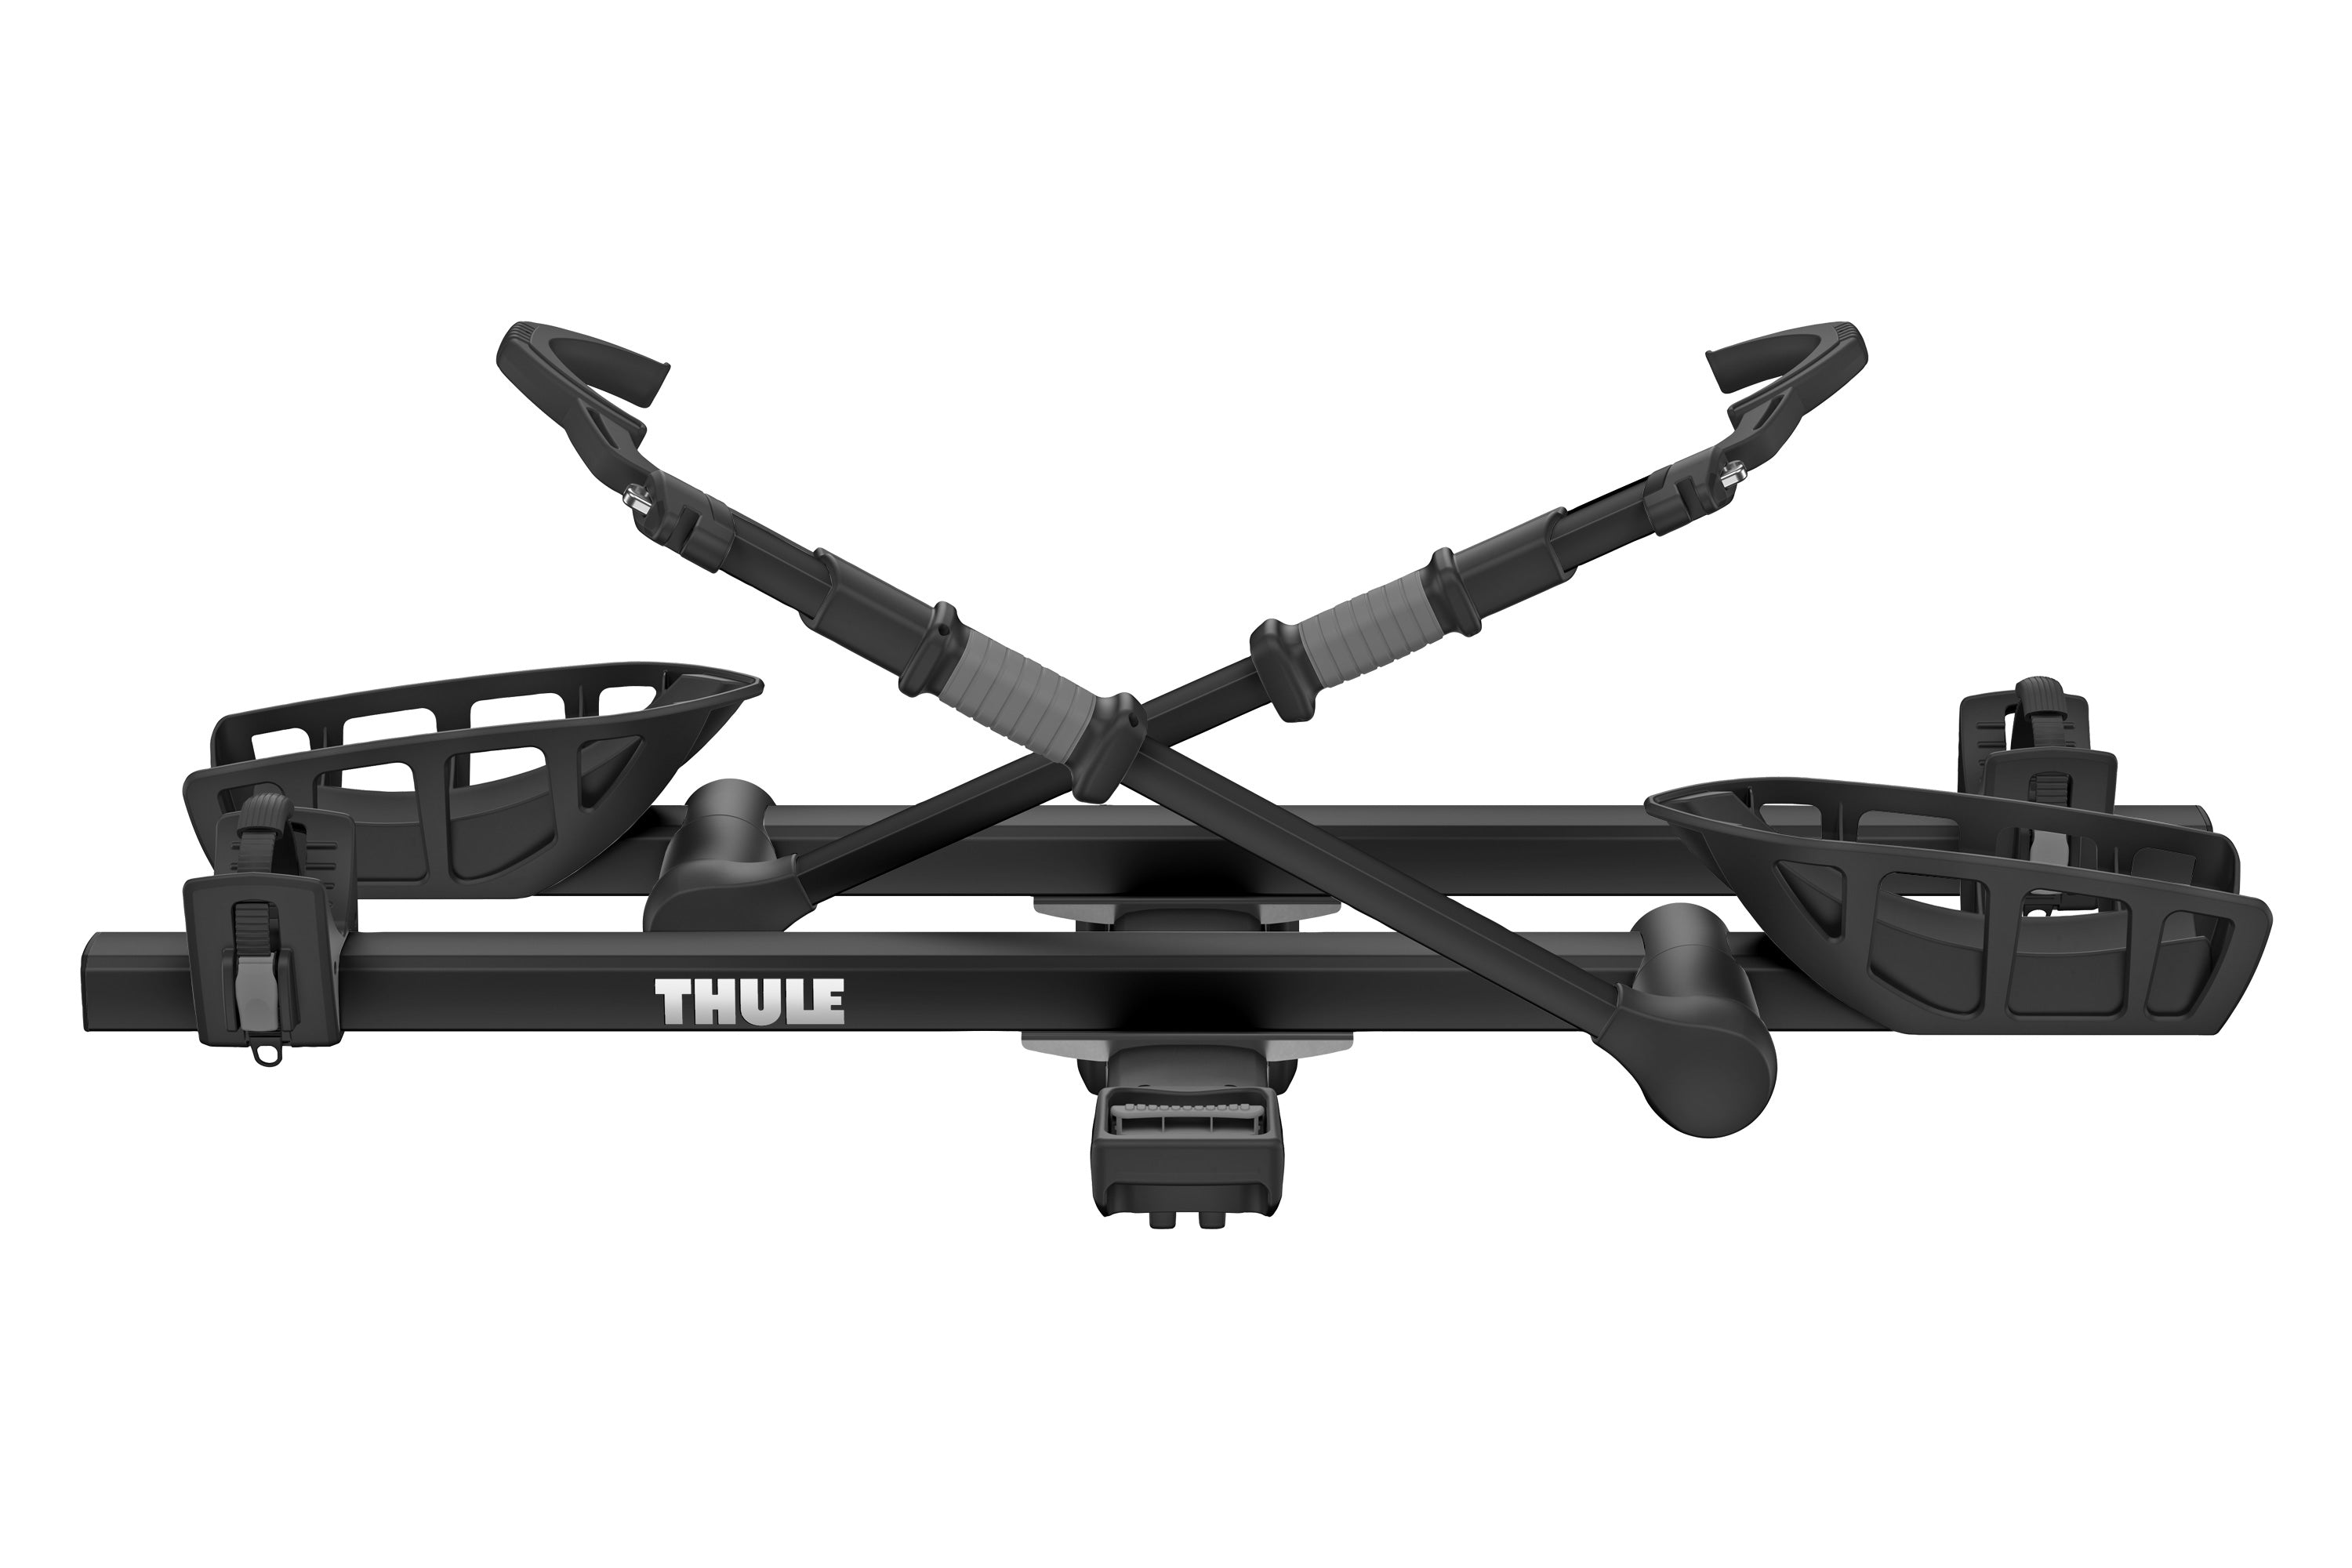 Thule T2 Pro XTR 2